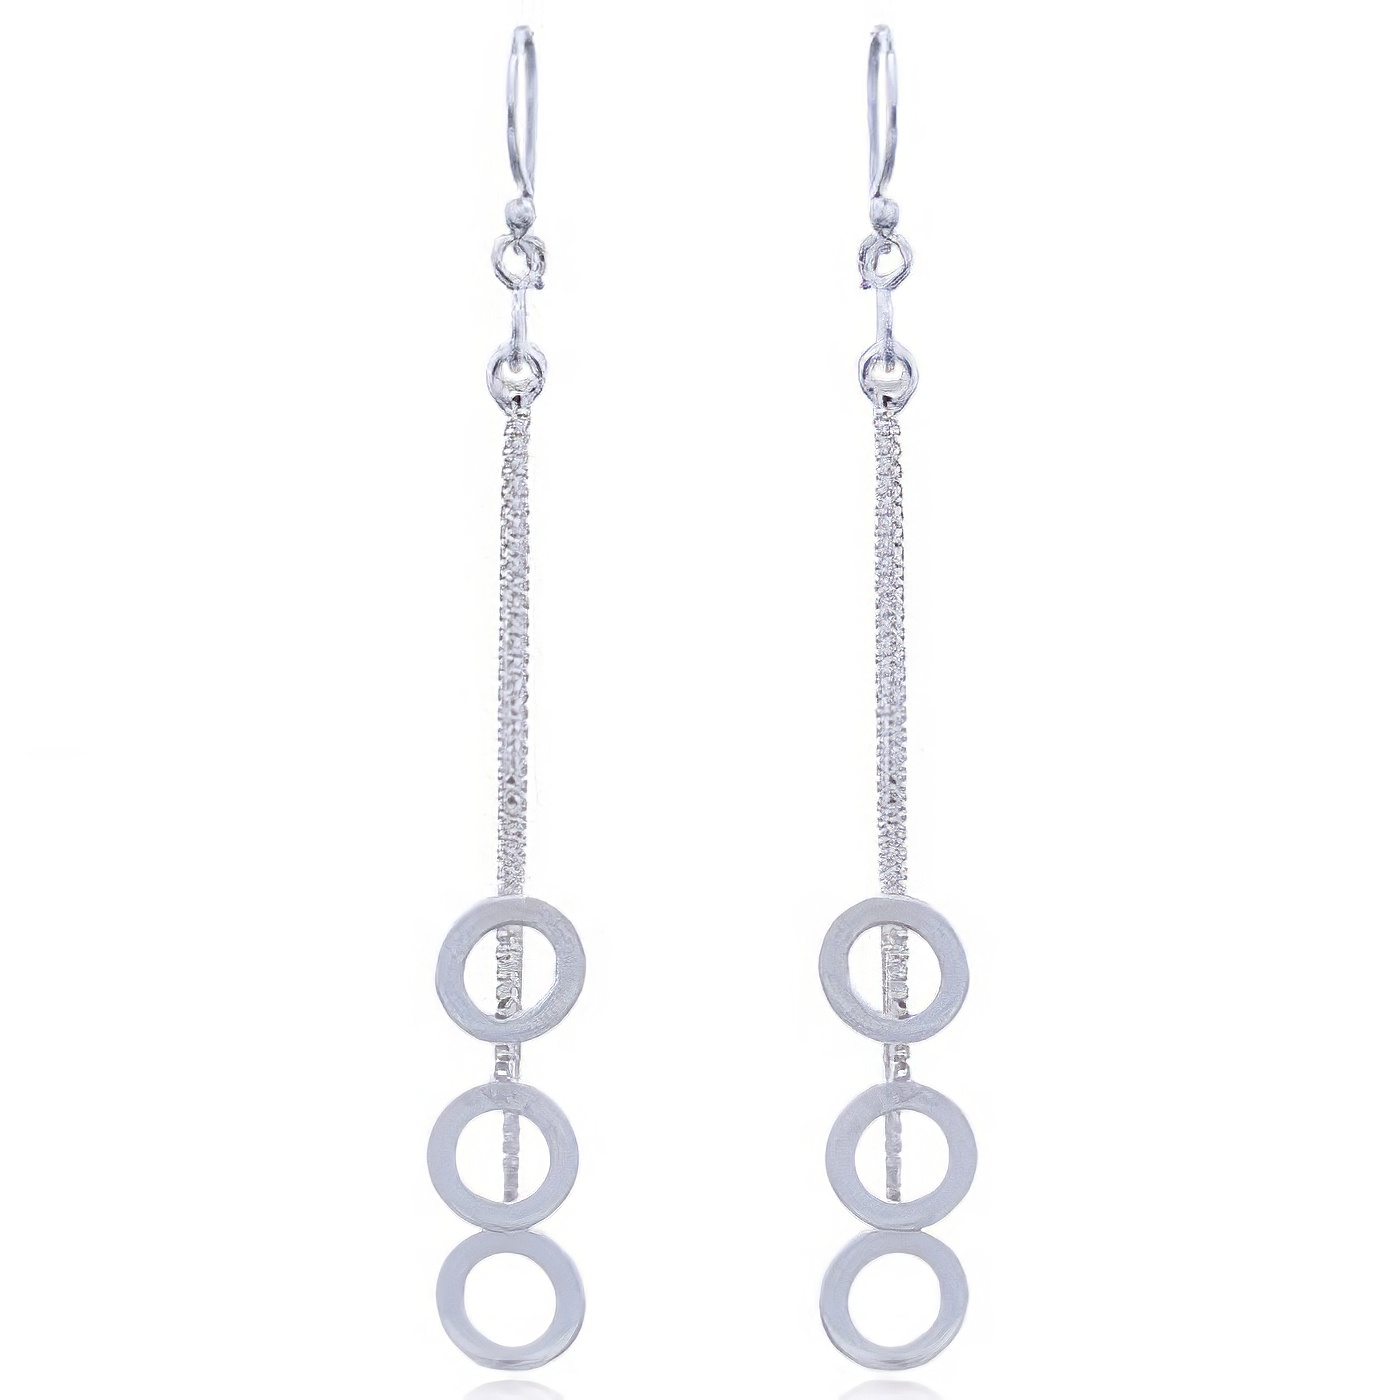 Hoops On Chains Plain Sterling Silver Chandelier Earrings by BeYindi 